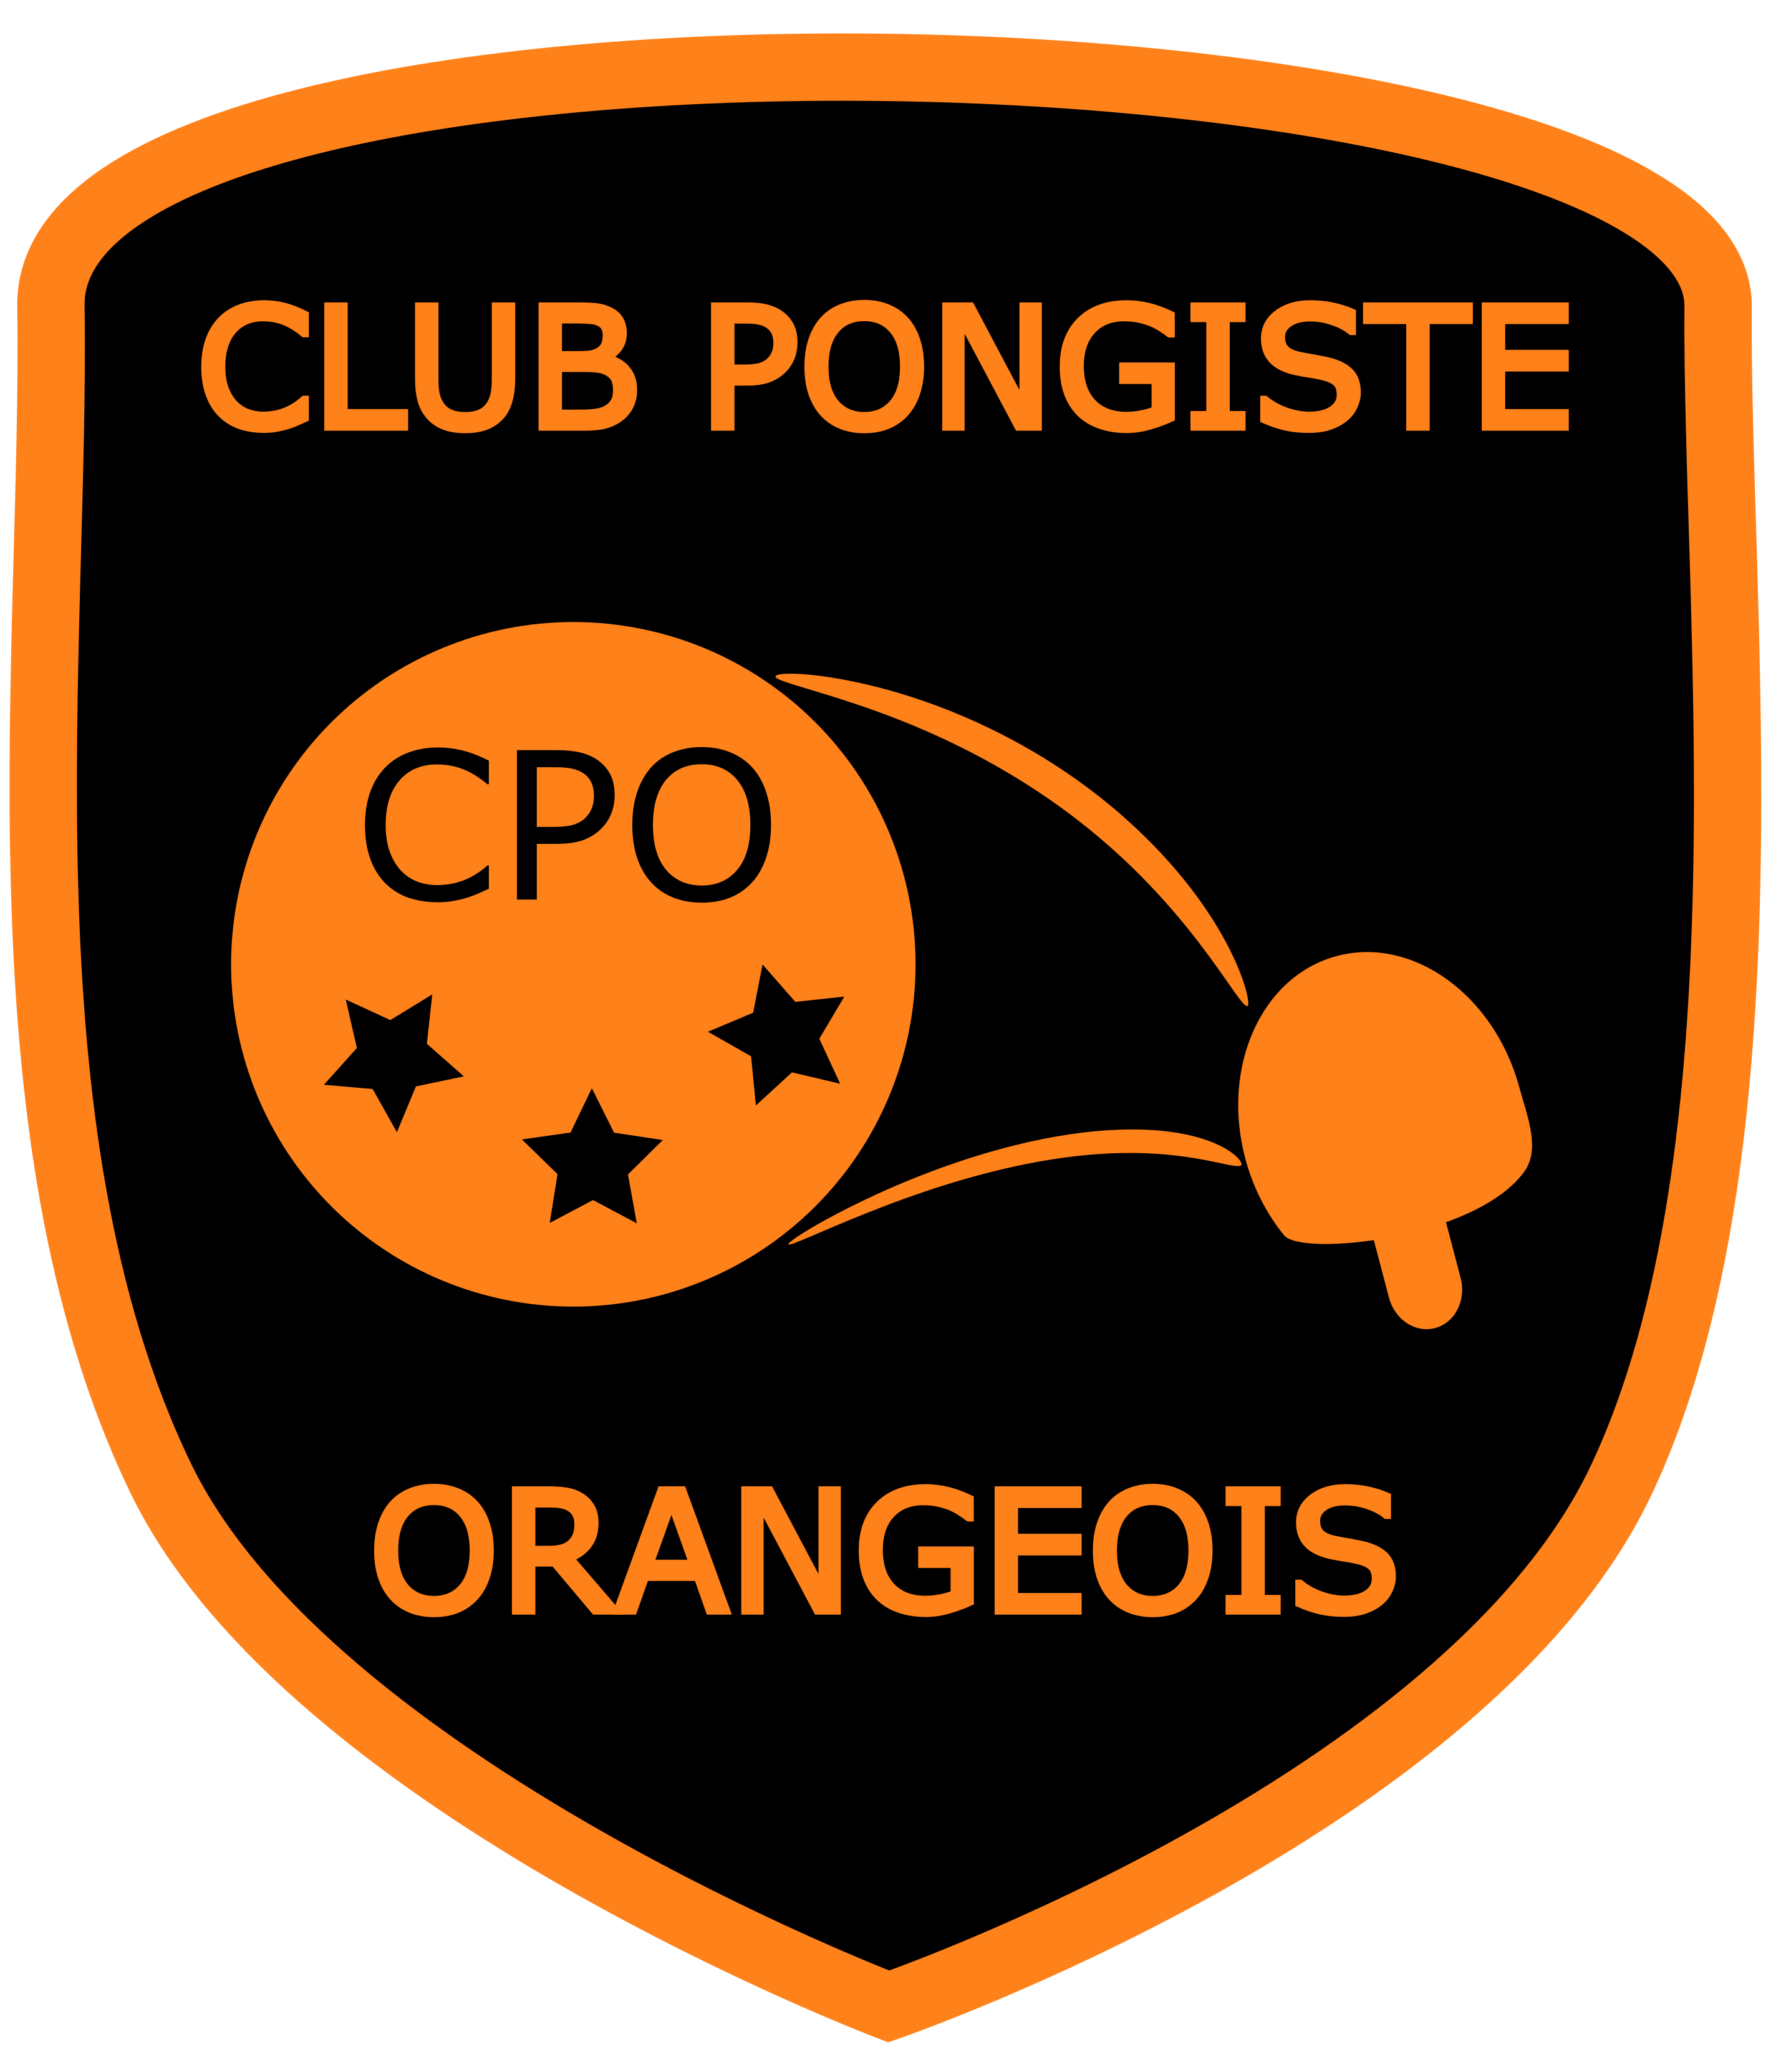 Club pongiste orangeois